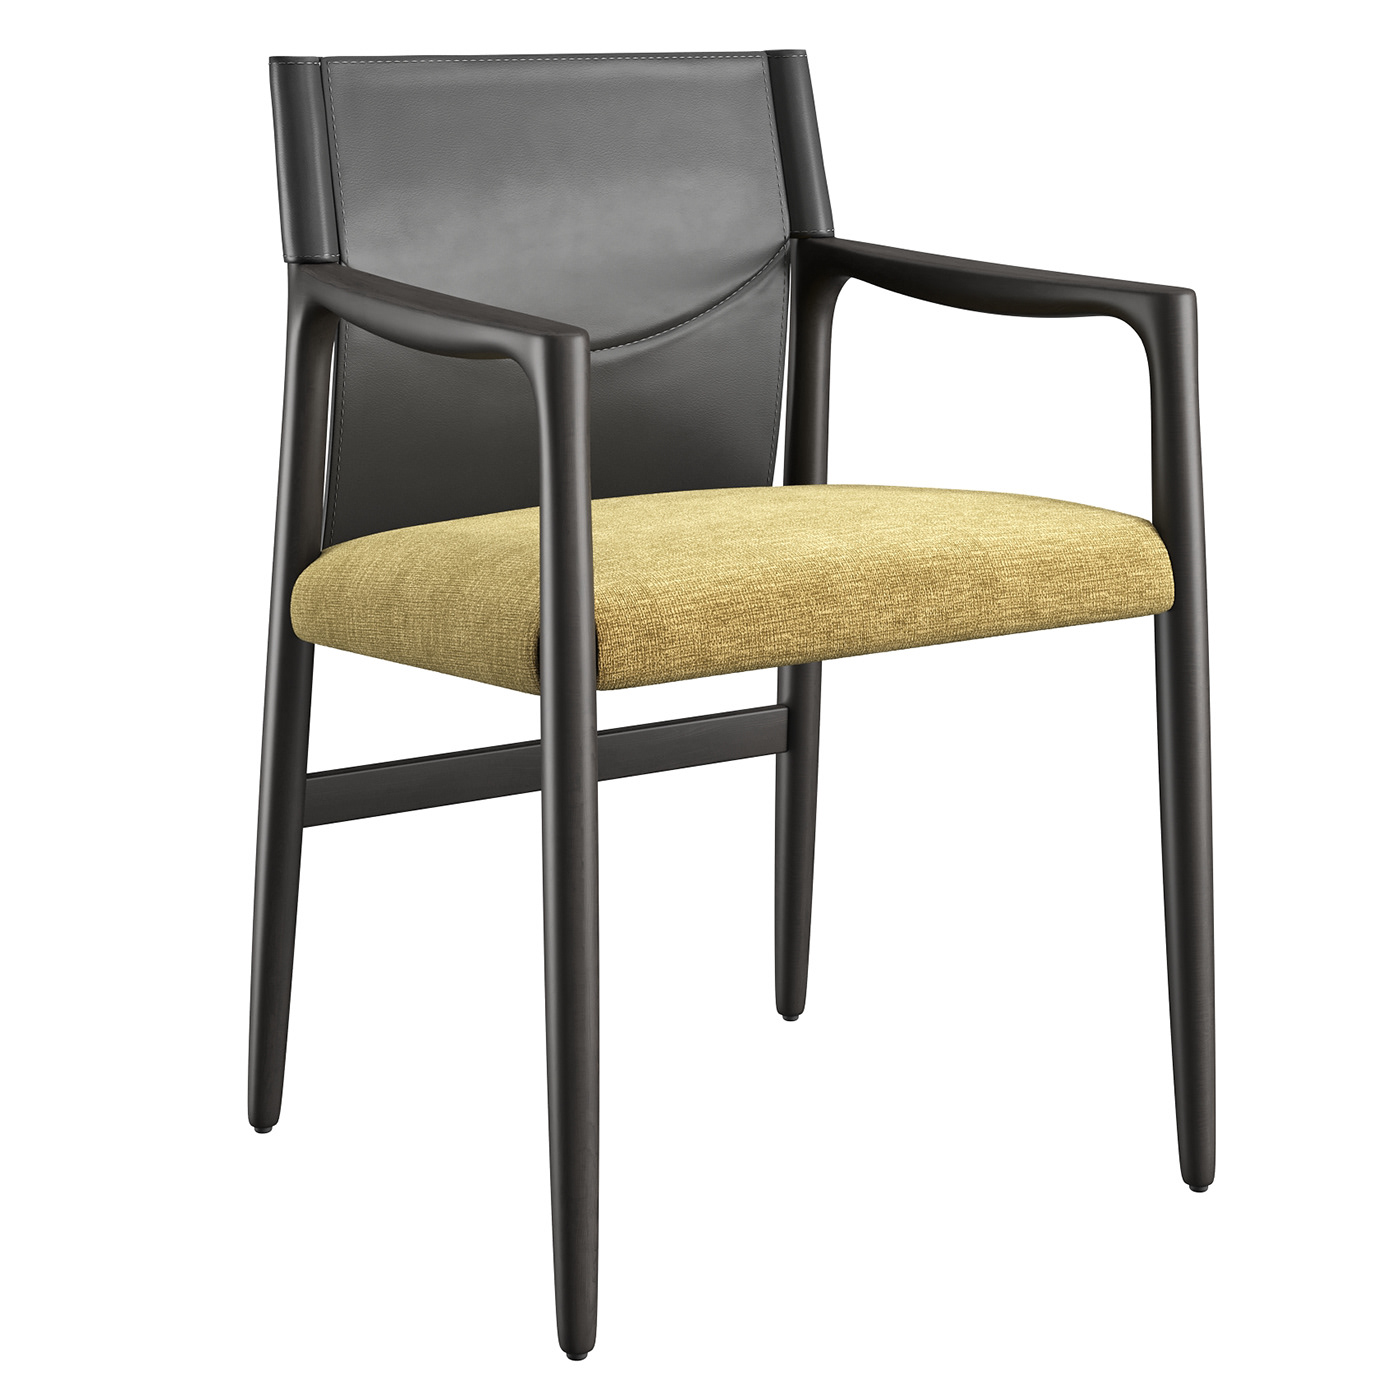 3D 3ds max armchair chair design Interior Render